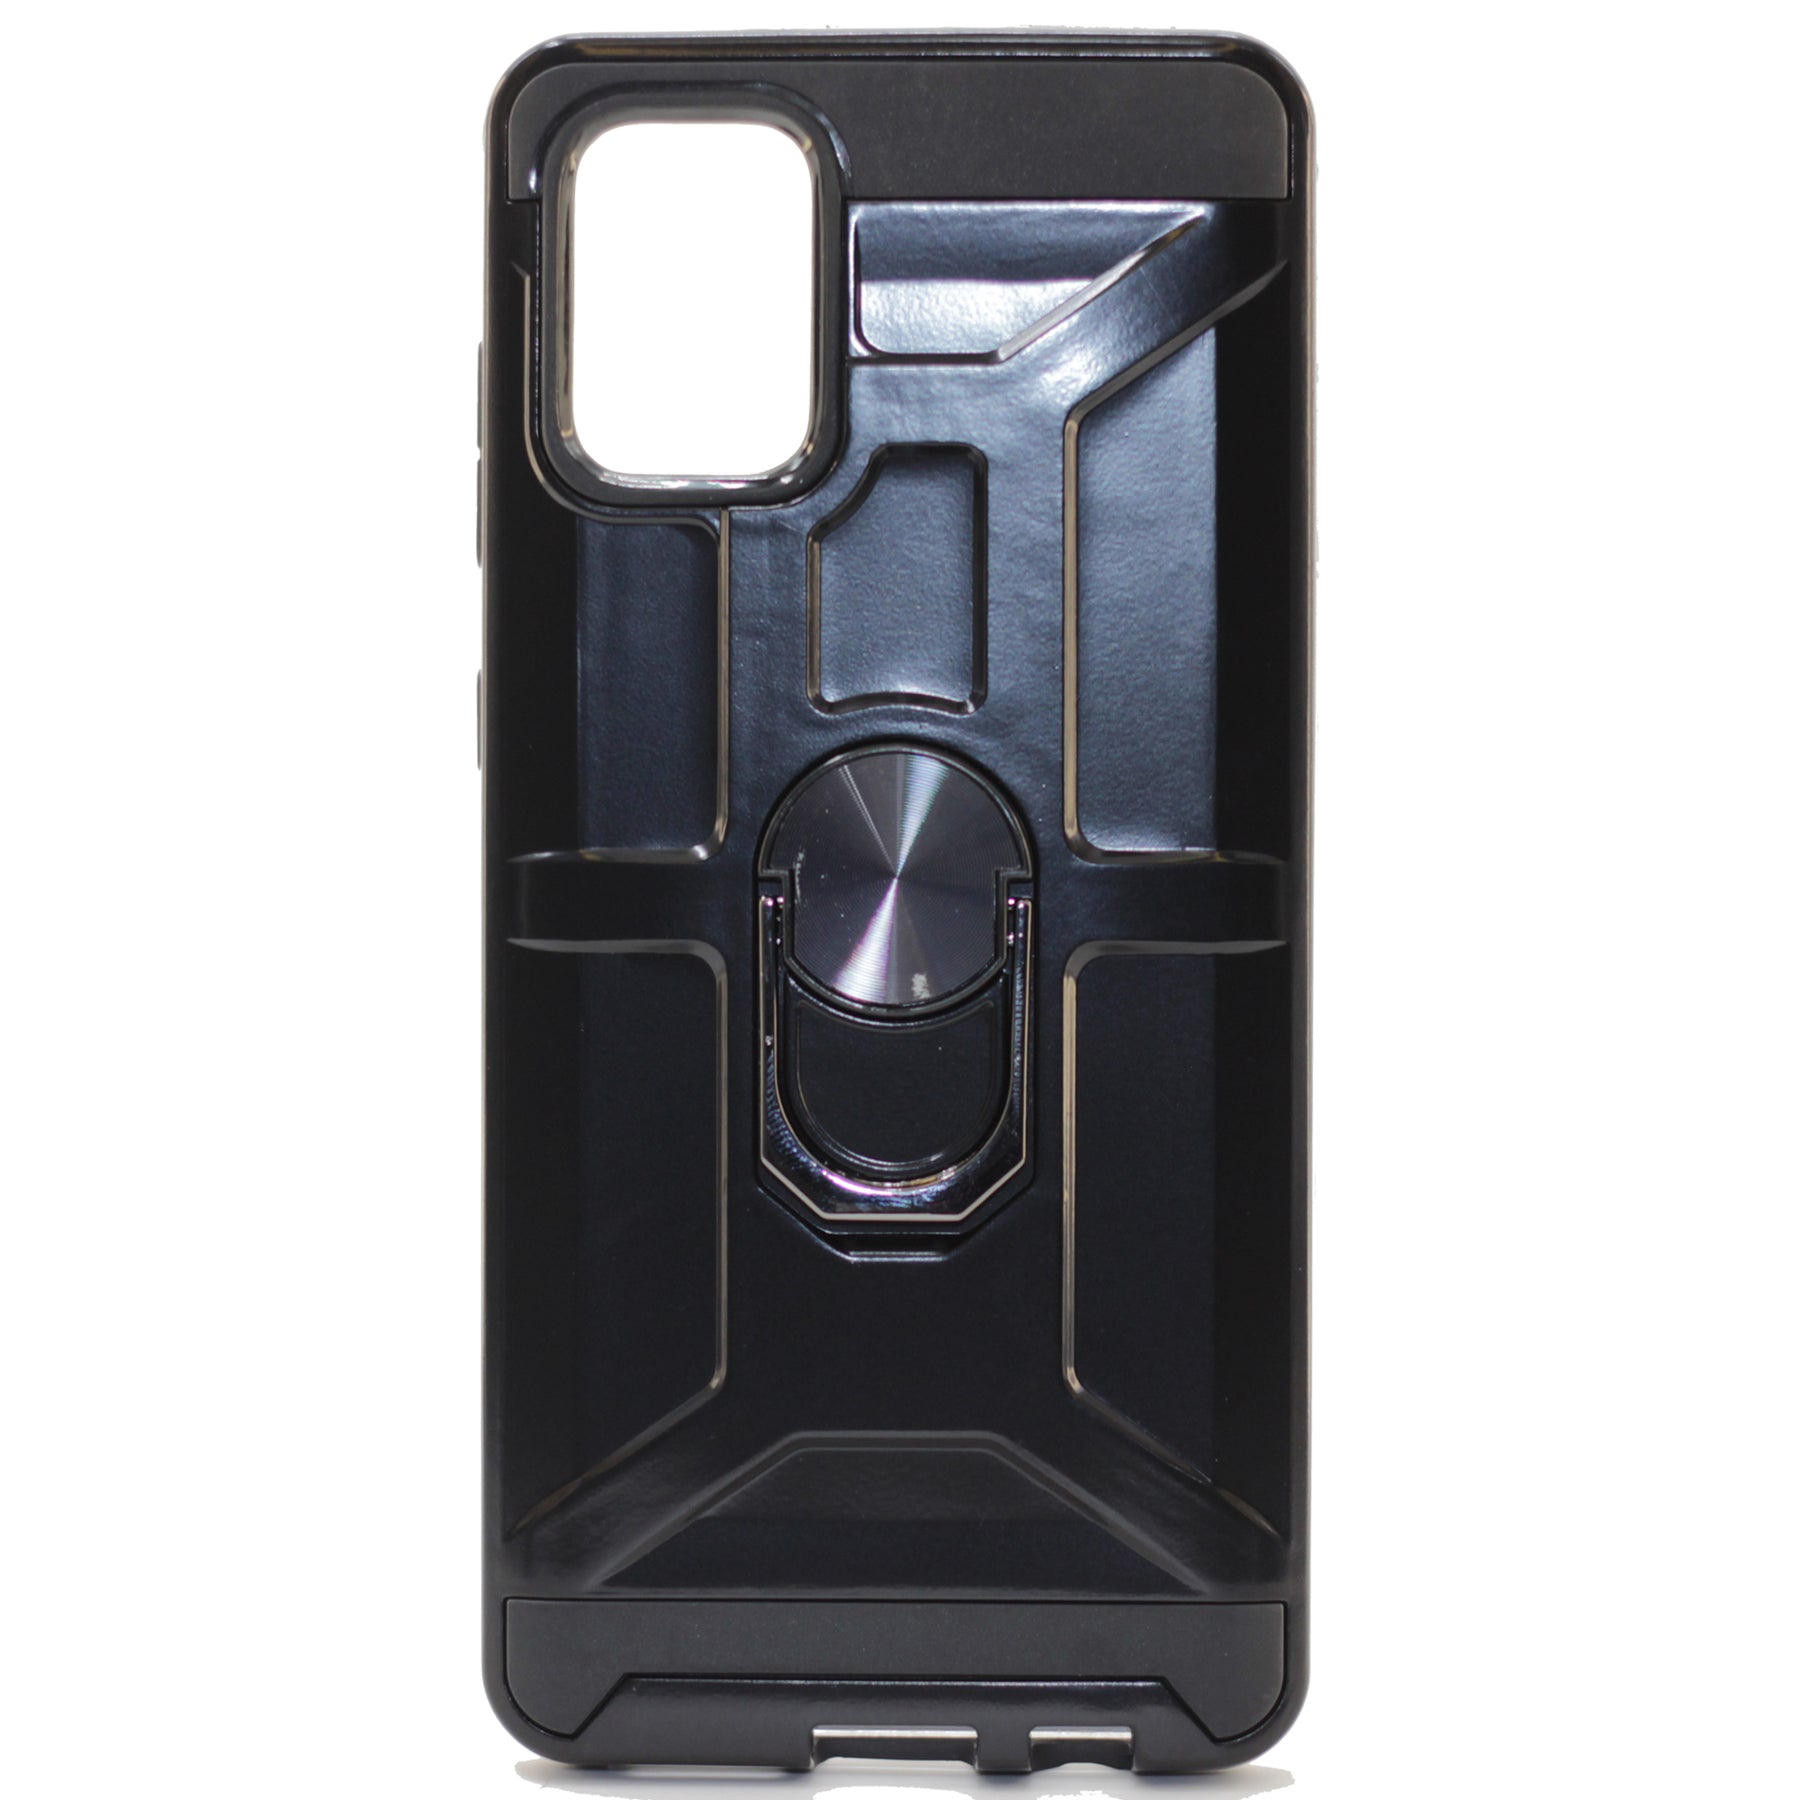 Samsung A71, Ring Armor Case, Color Black.